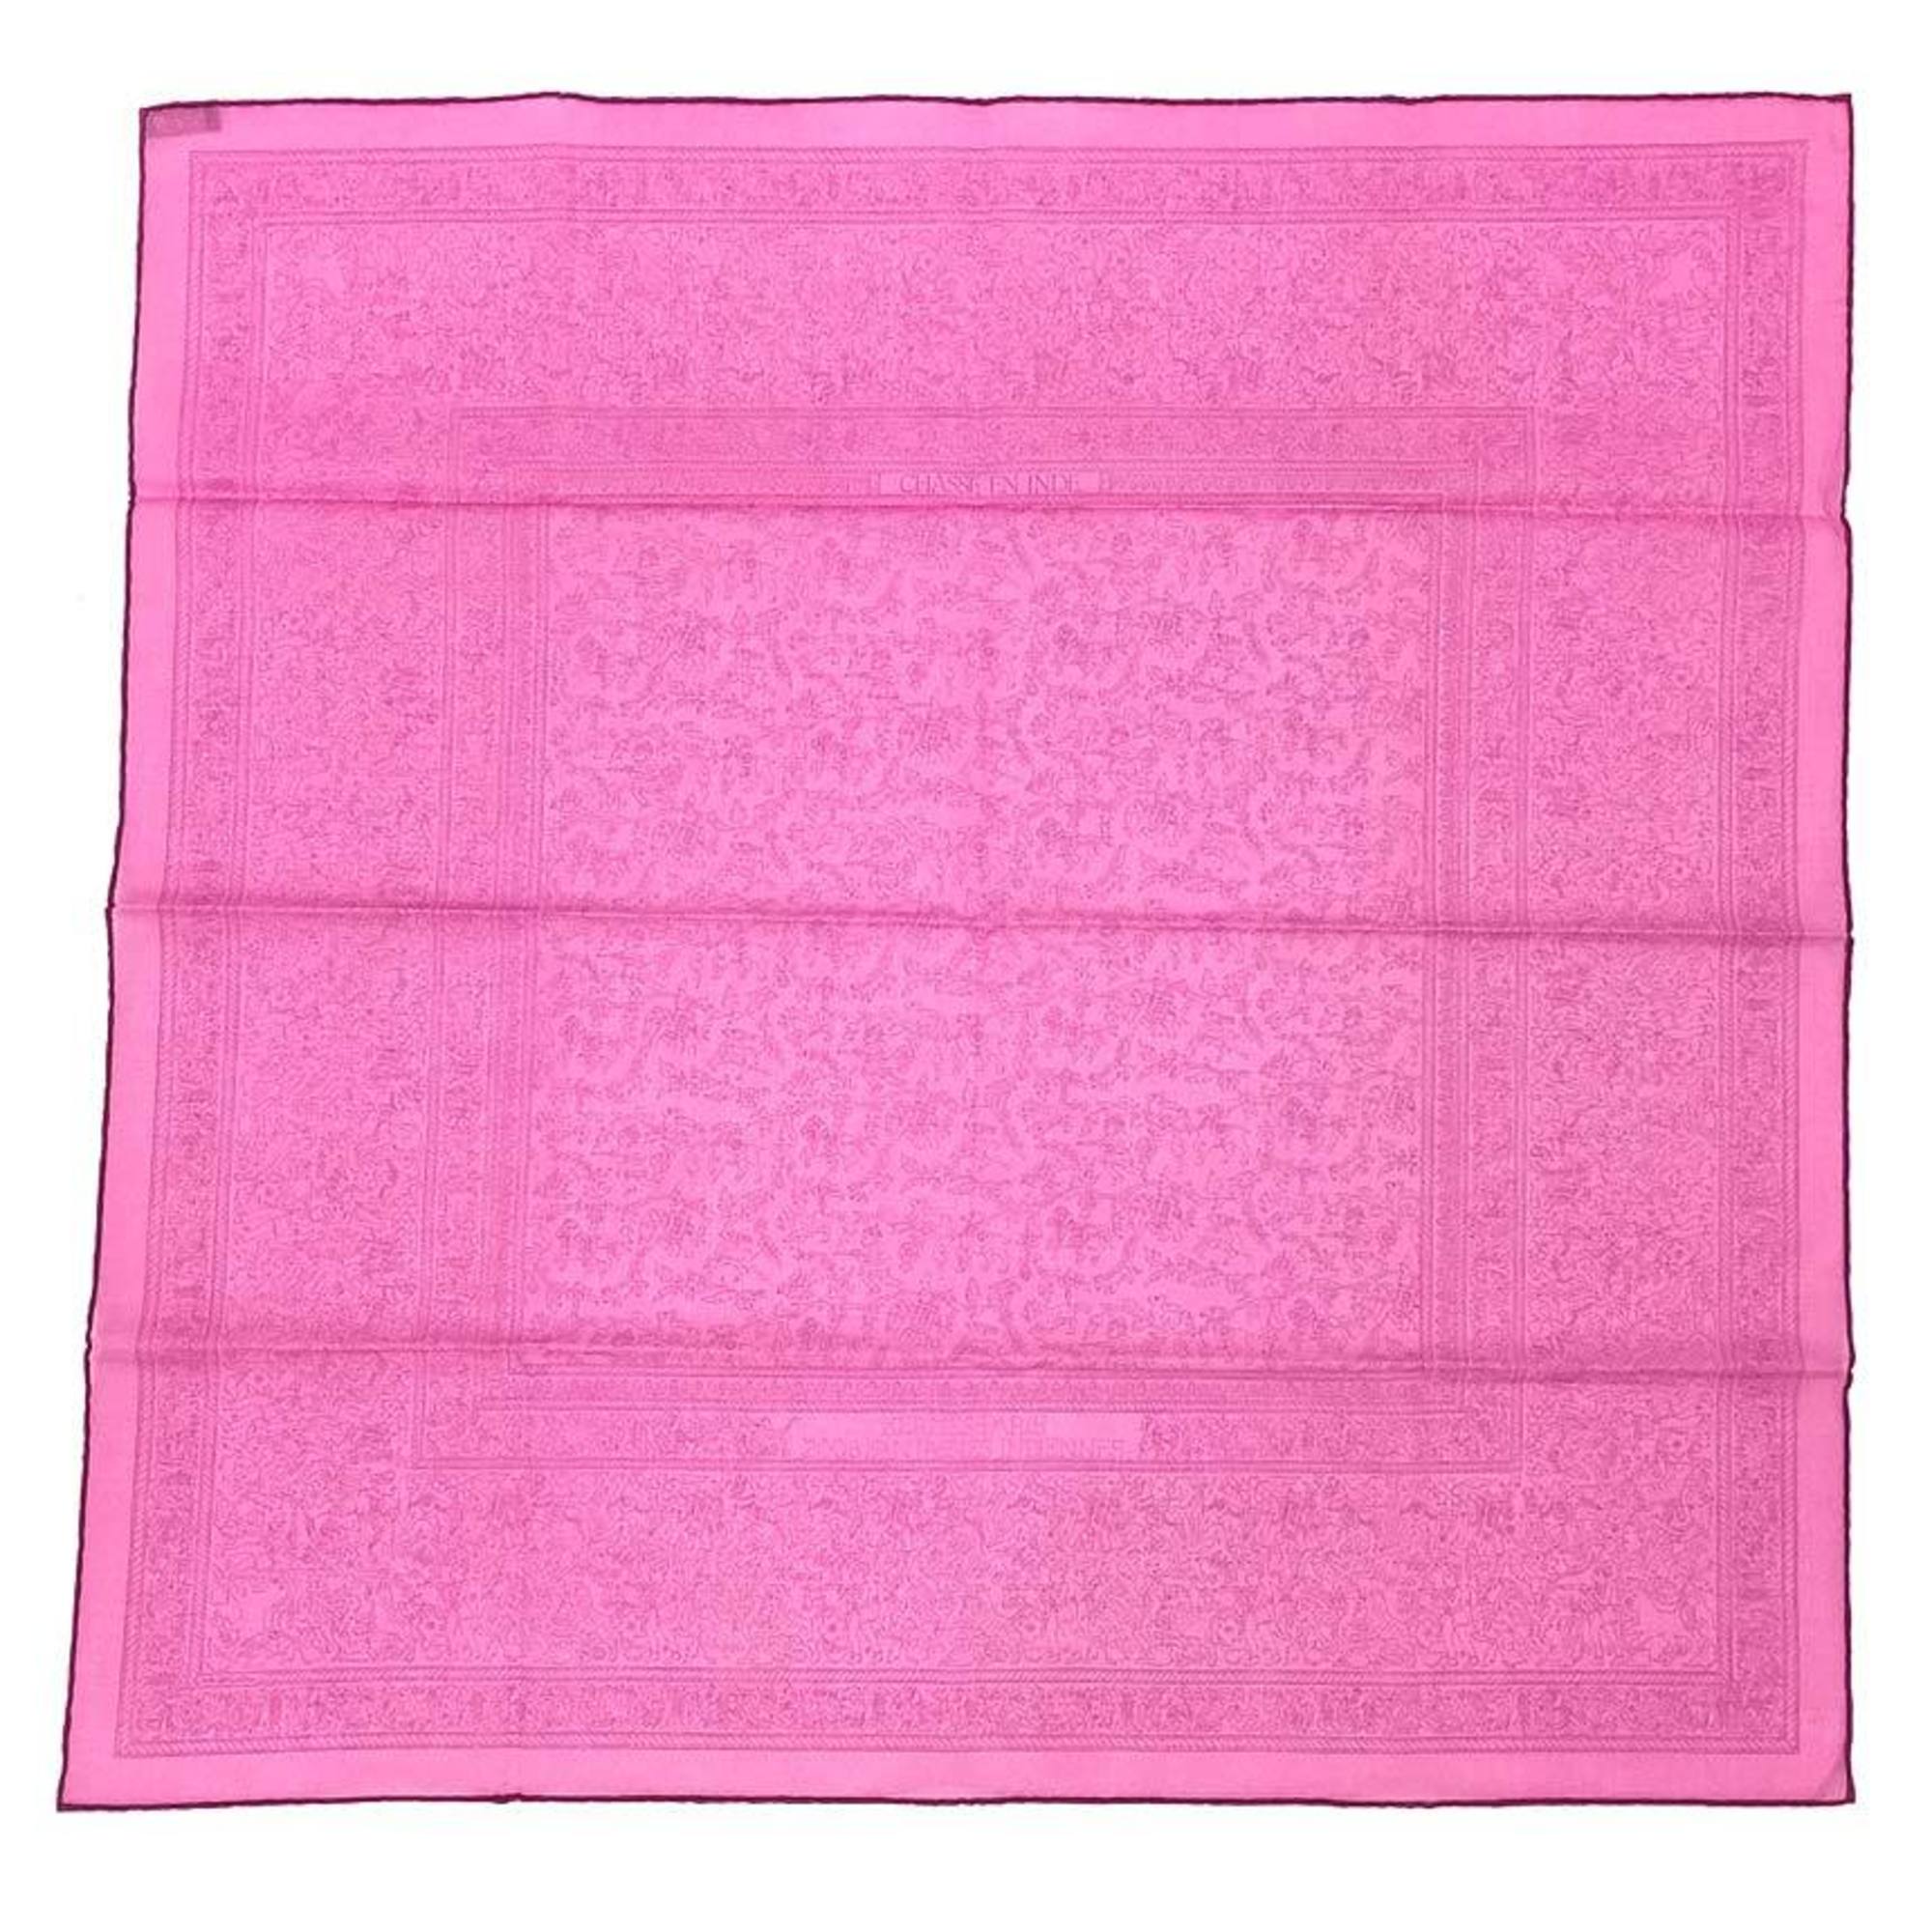 HERMES Hermes Carre 65 Handkerchief Bandana 100% Cotton CHASSE EN INDE Indian Hunting Pocket Neckerchief Pink Purple aq9338